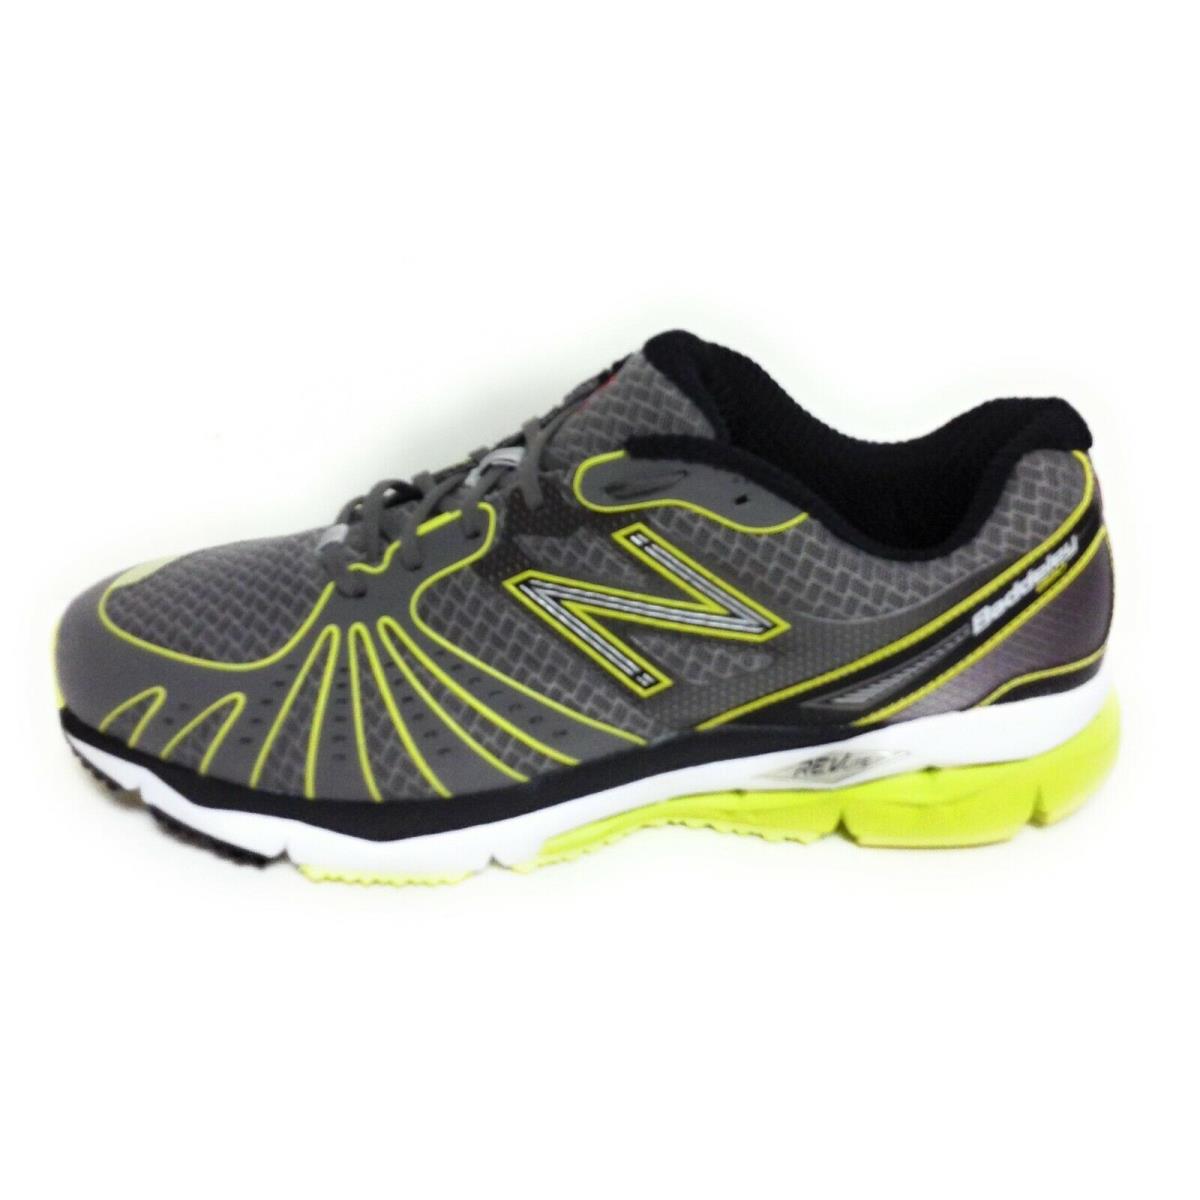 Mens New Balance 890 GG Grey Yellow Green Black Running Sneakers Shoes